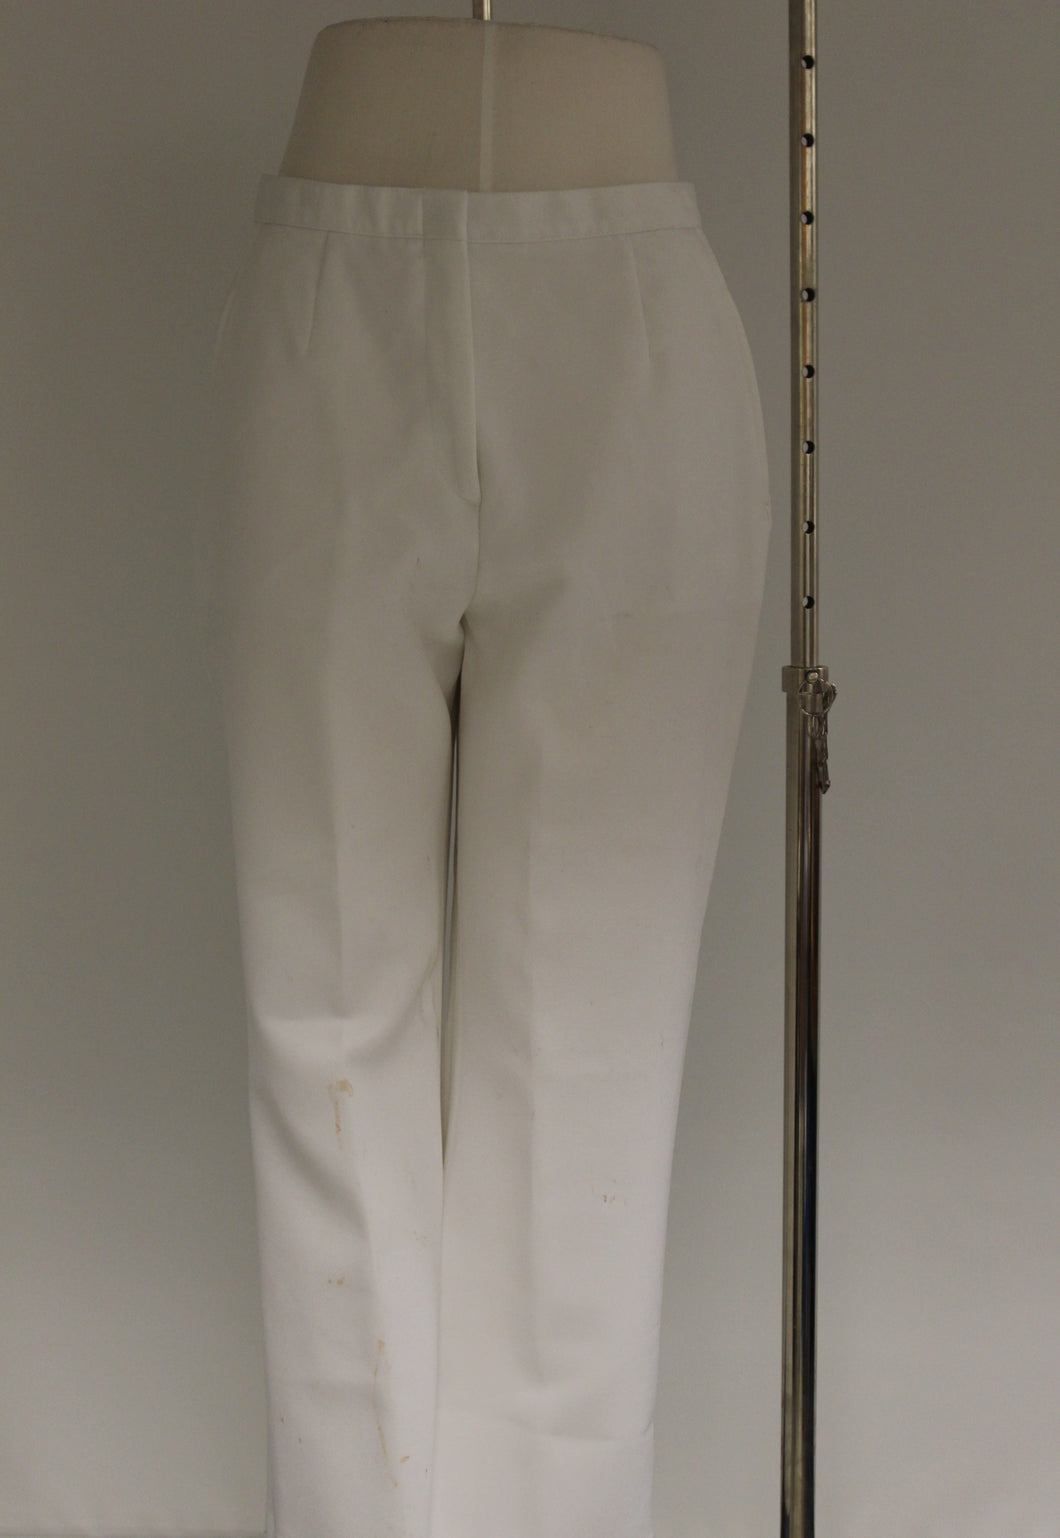 US Navy Women's White Slacks, Size: 16 MP, NSN: 8410-01-311-9679